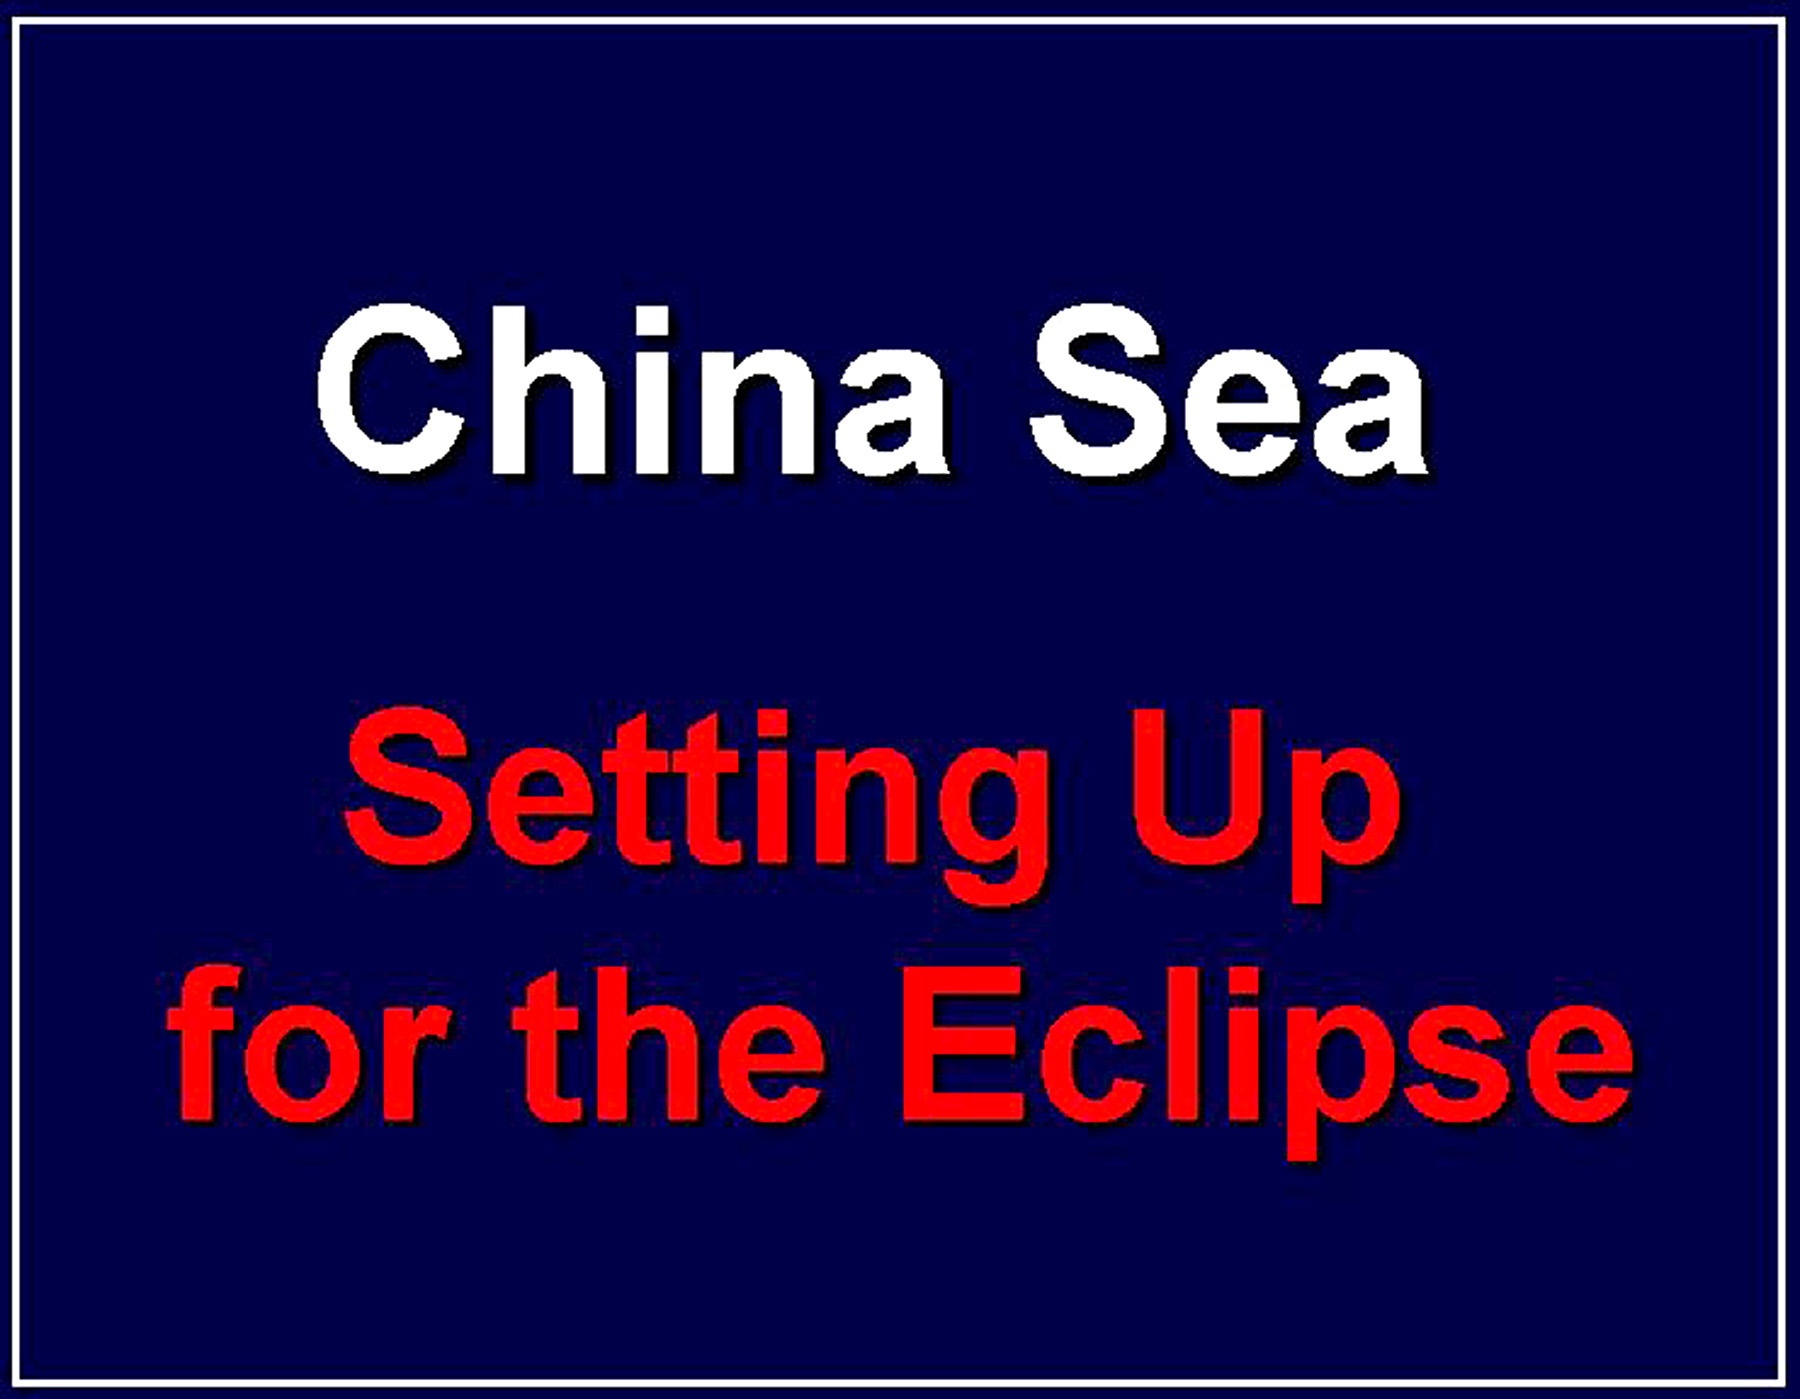 Eclipse 2009 - DSC_4022 - Title - China Sea Setup